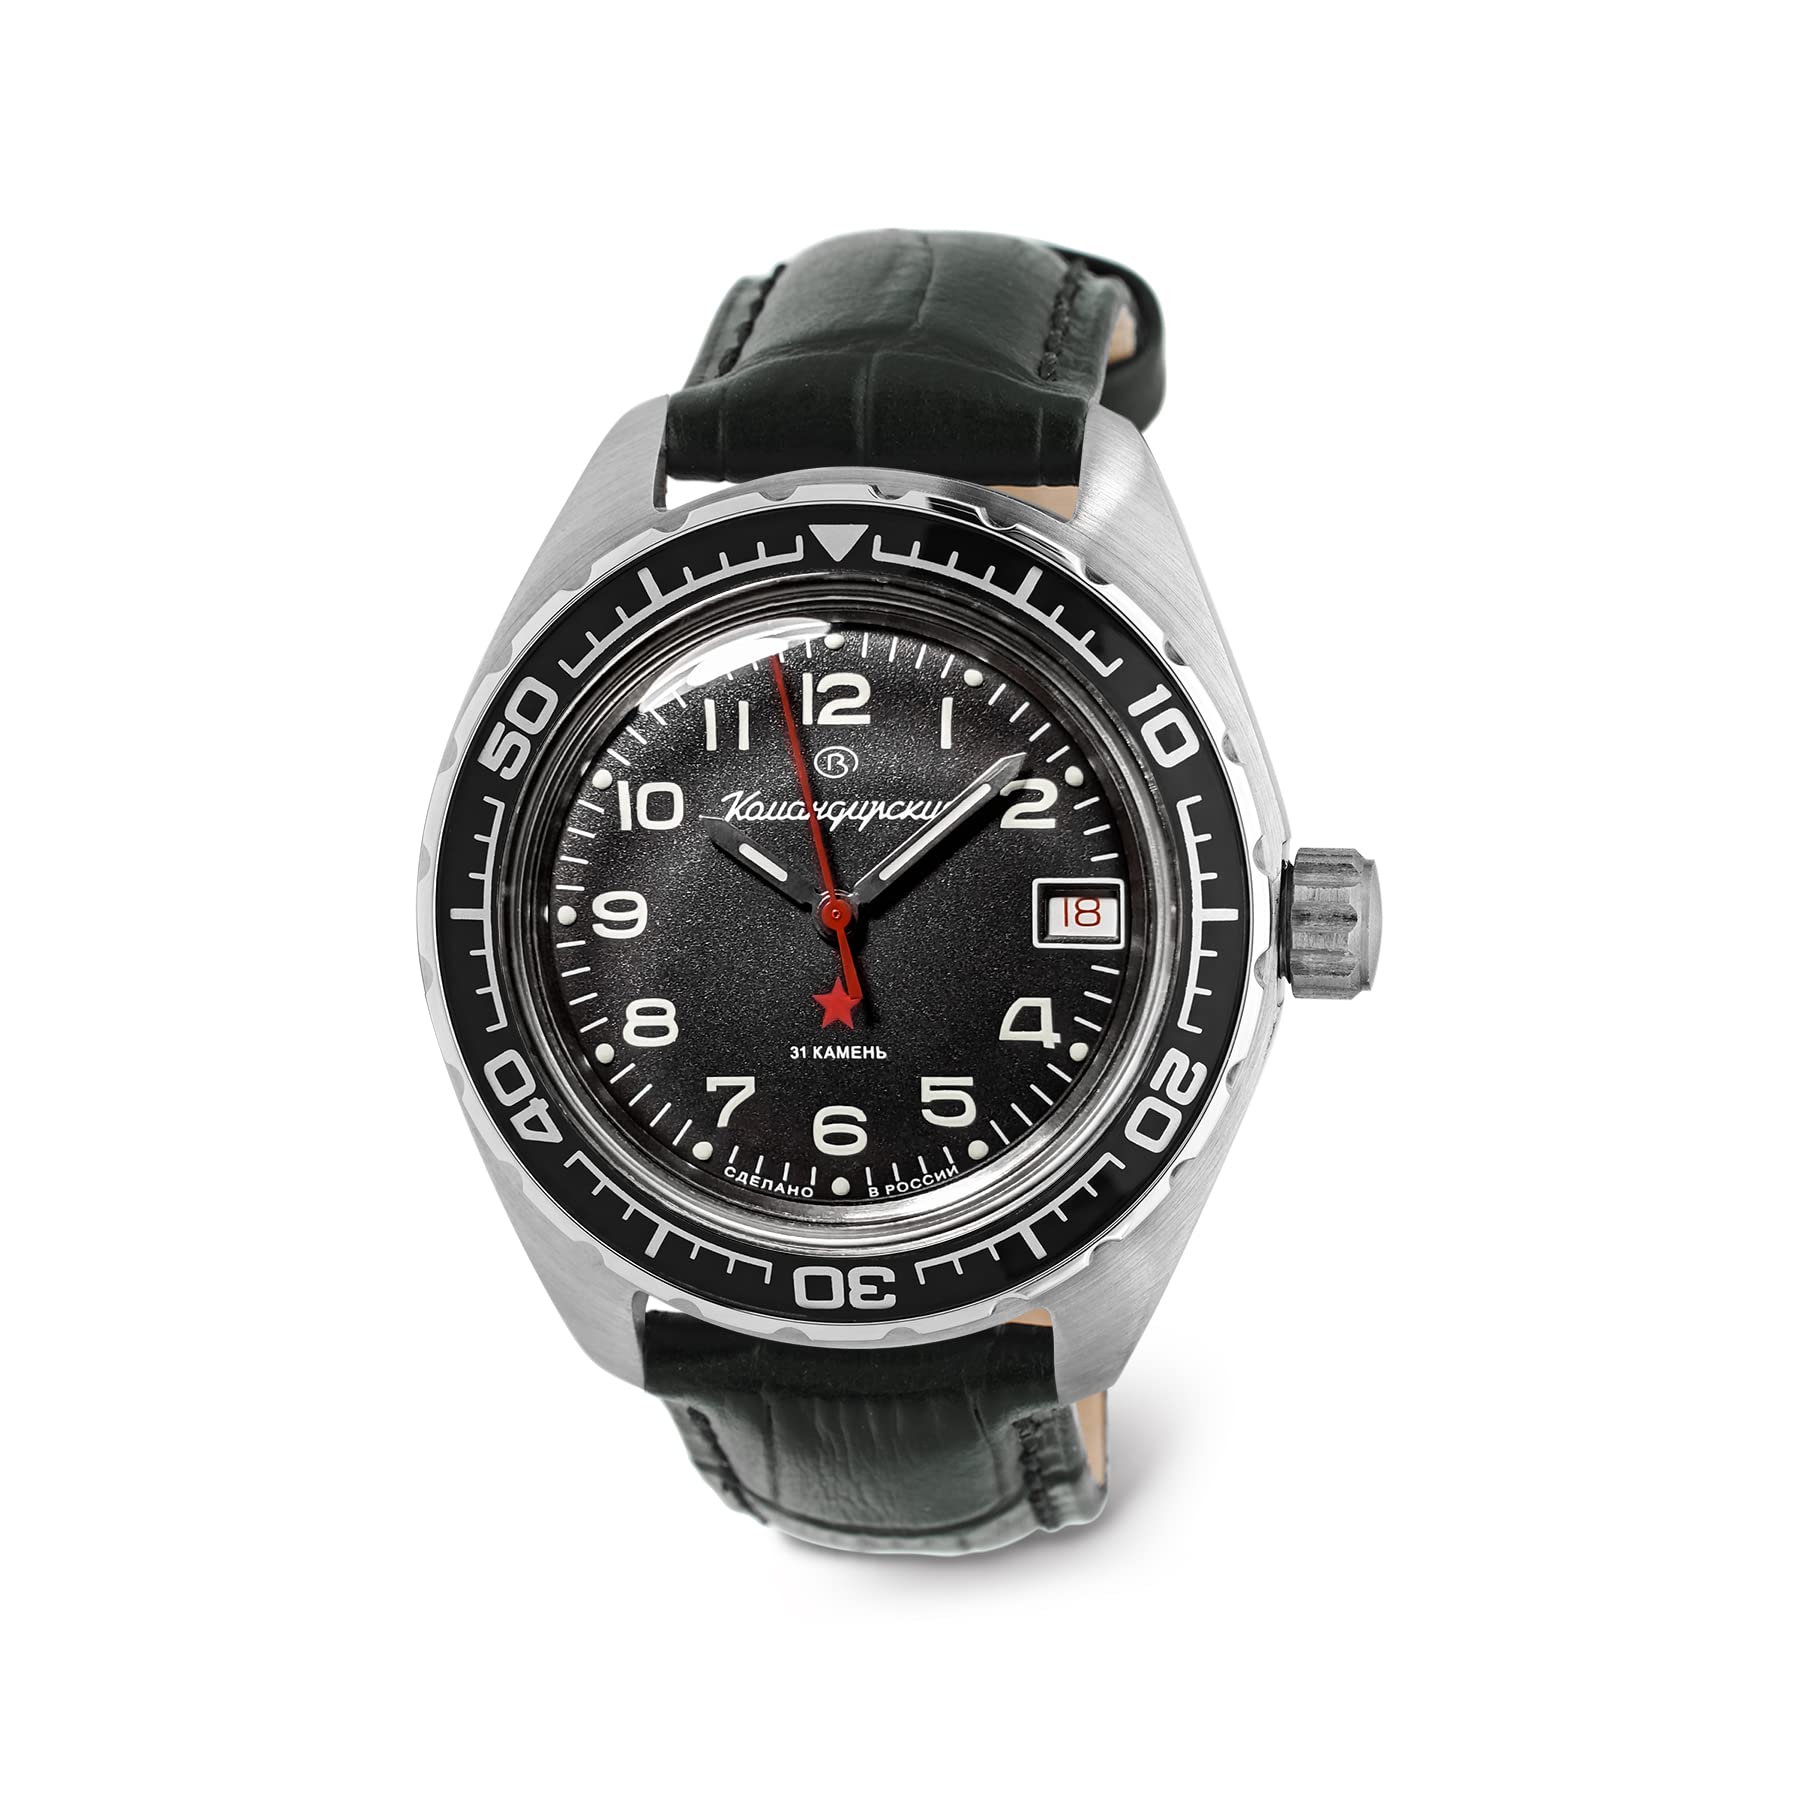 VOSTOK Komandirskie K-02 Automatic Self-Winding Russian Military Diver Wrist Watch WR 200 m Fashion Business Casual